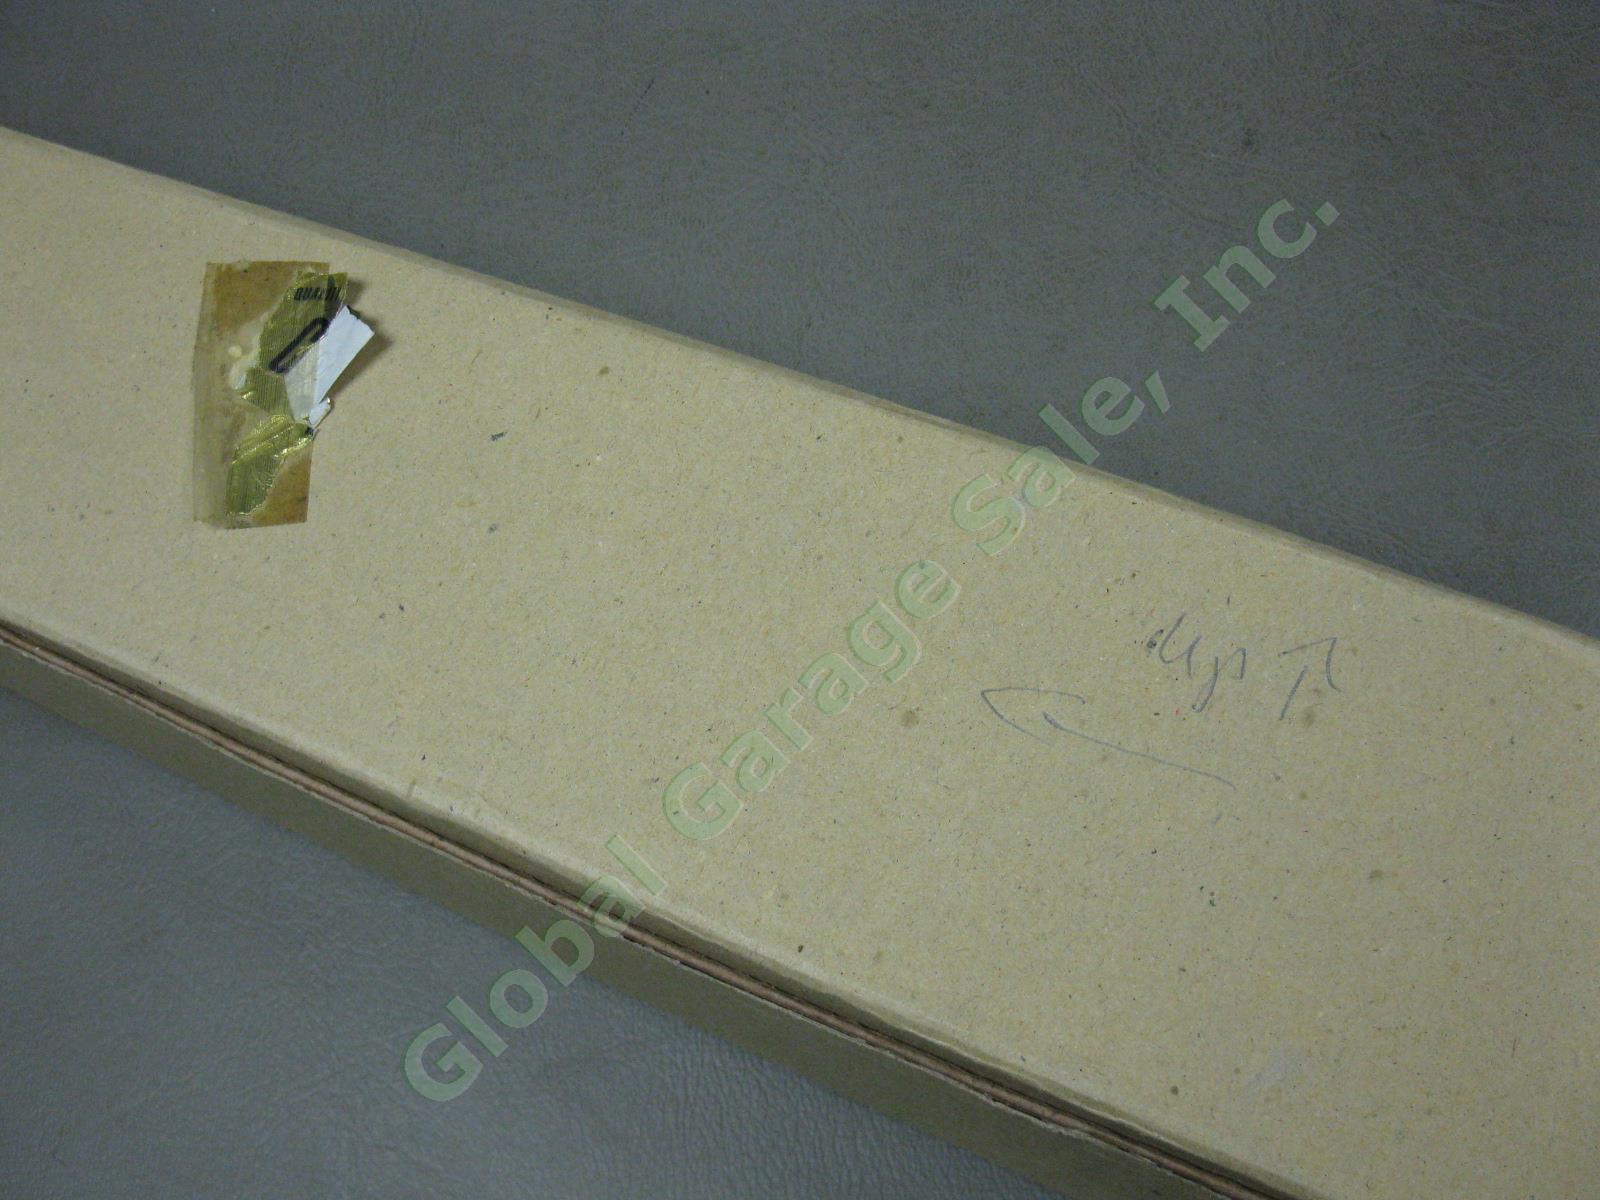 Vtg 1980s 2-Piece Birdseye Maple Pool Cue Stick W/ Hard Case + Box 19.2oz #JS65 8